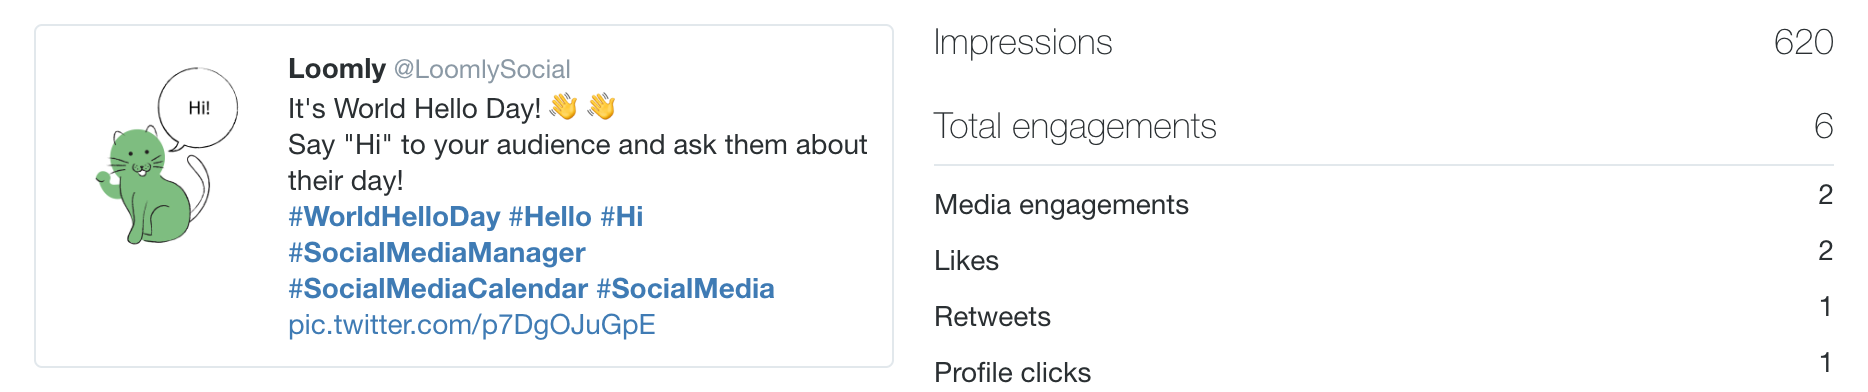 Social Media Analytics Twitter Engagement Tweet